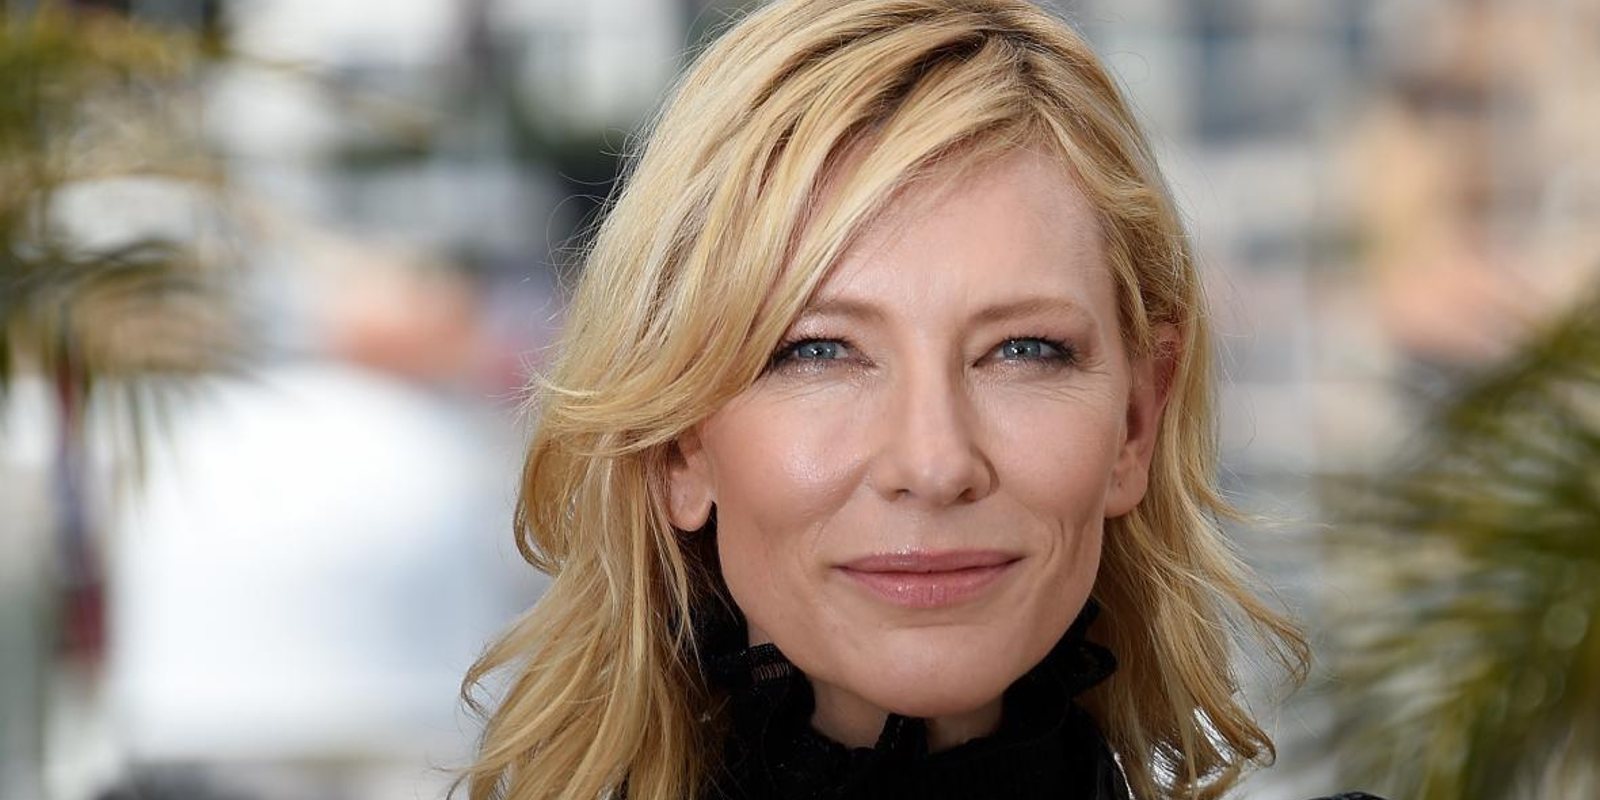 El caso Weinstein continúa: Cate Blanchett afirma haber sufrido acoso